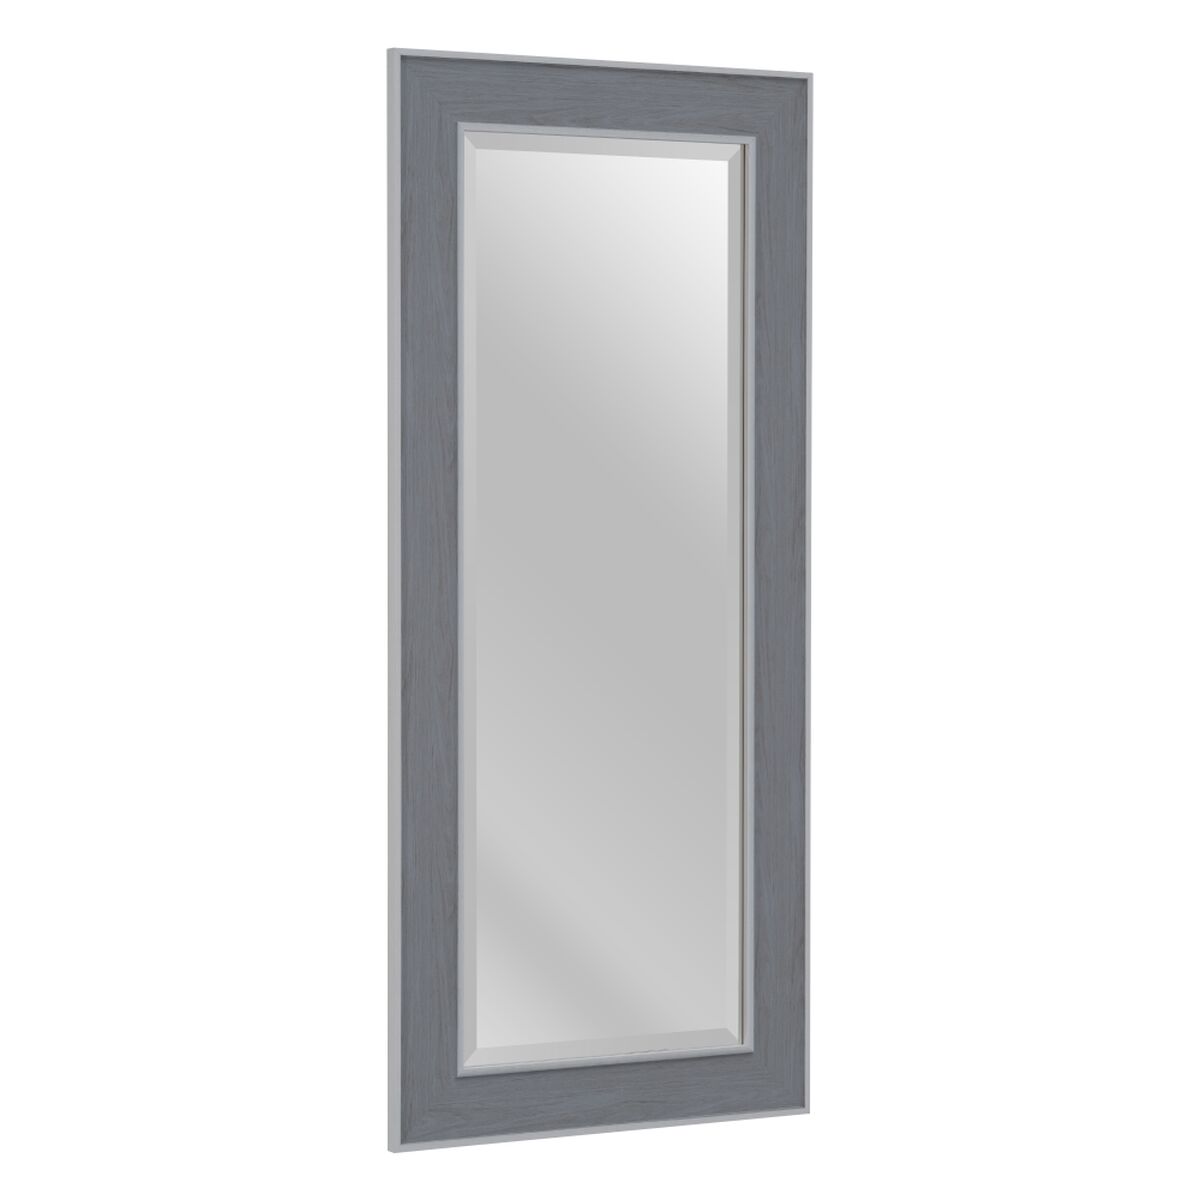 Wall mirror 56 x 2 x 126 cm Grey Wood White